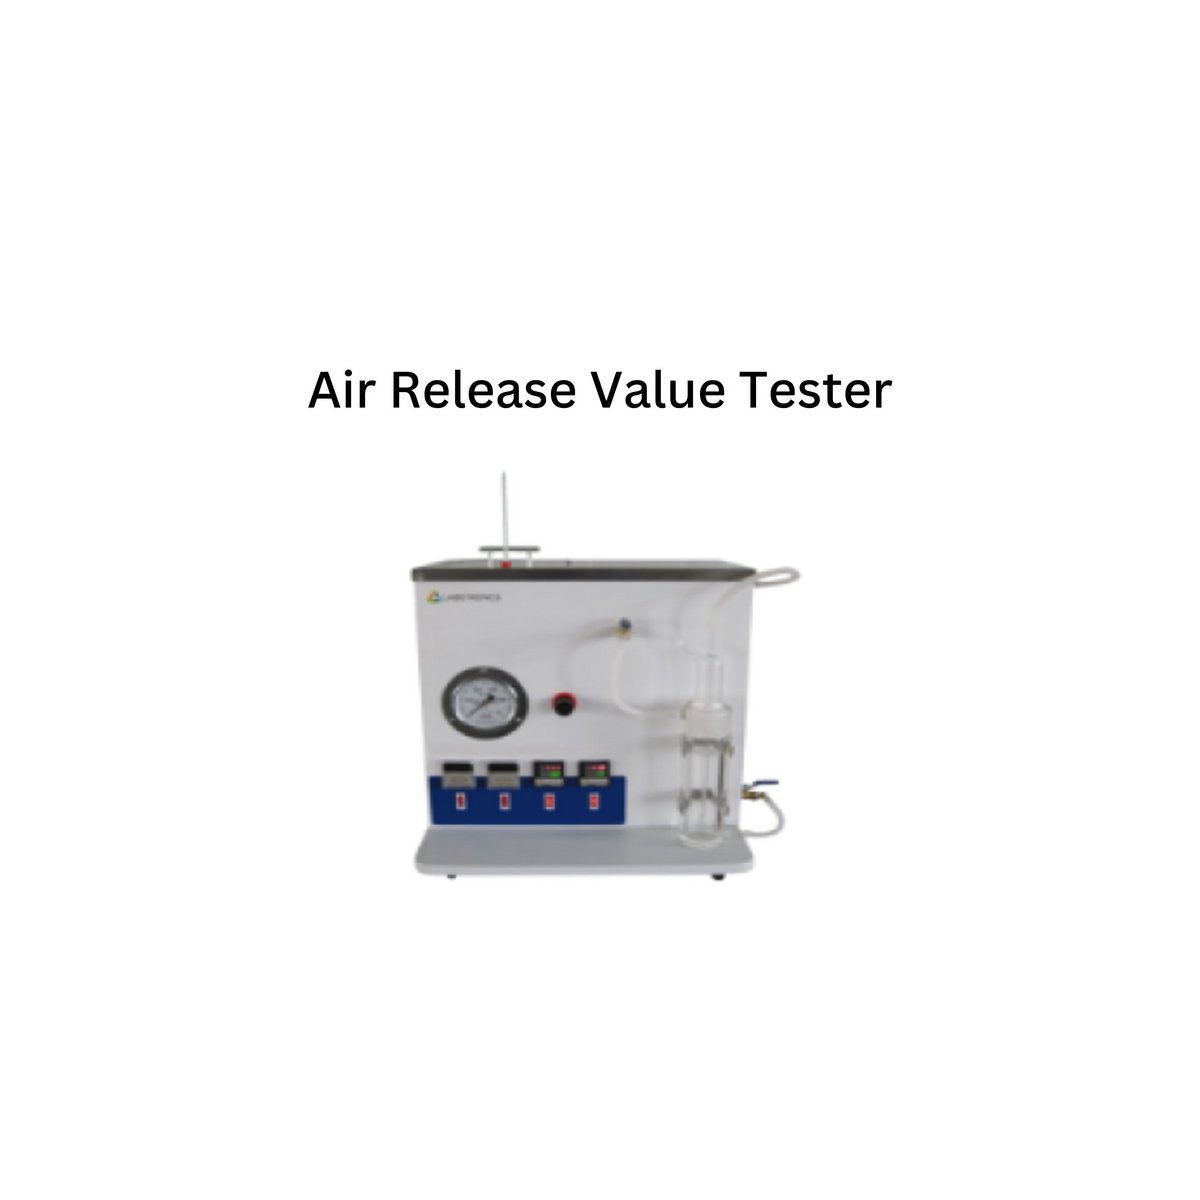 Air Release Value Tester.jpg